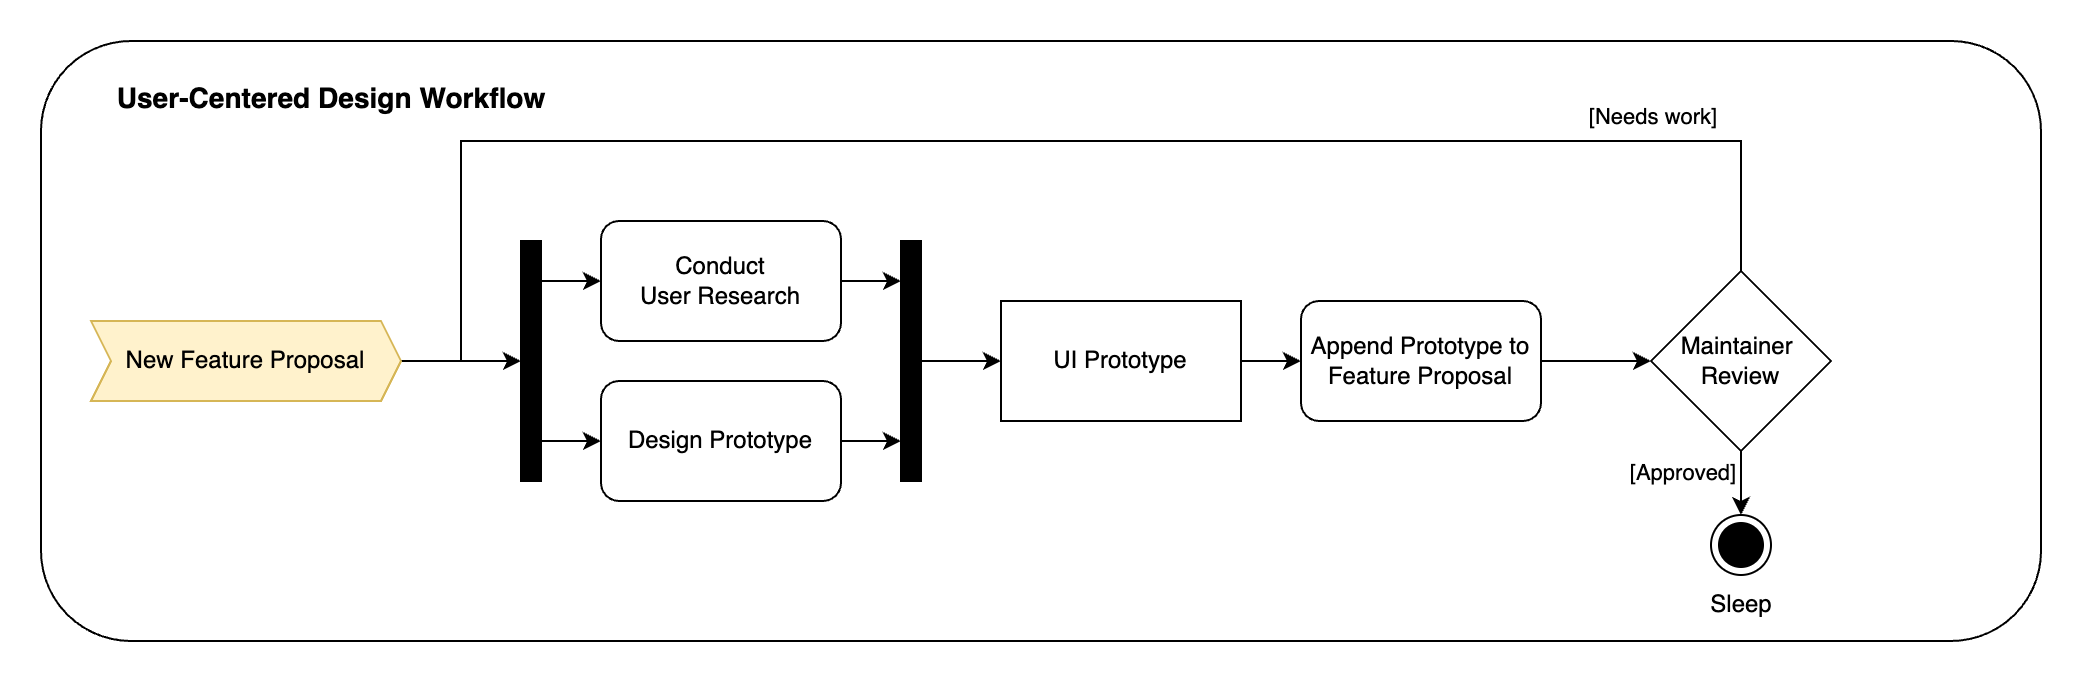 UI/UX Design Workflow - Activity Diagram